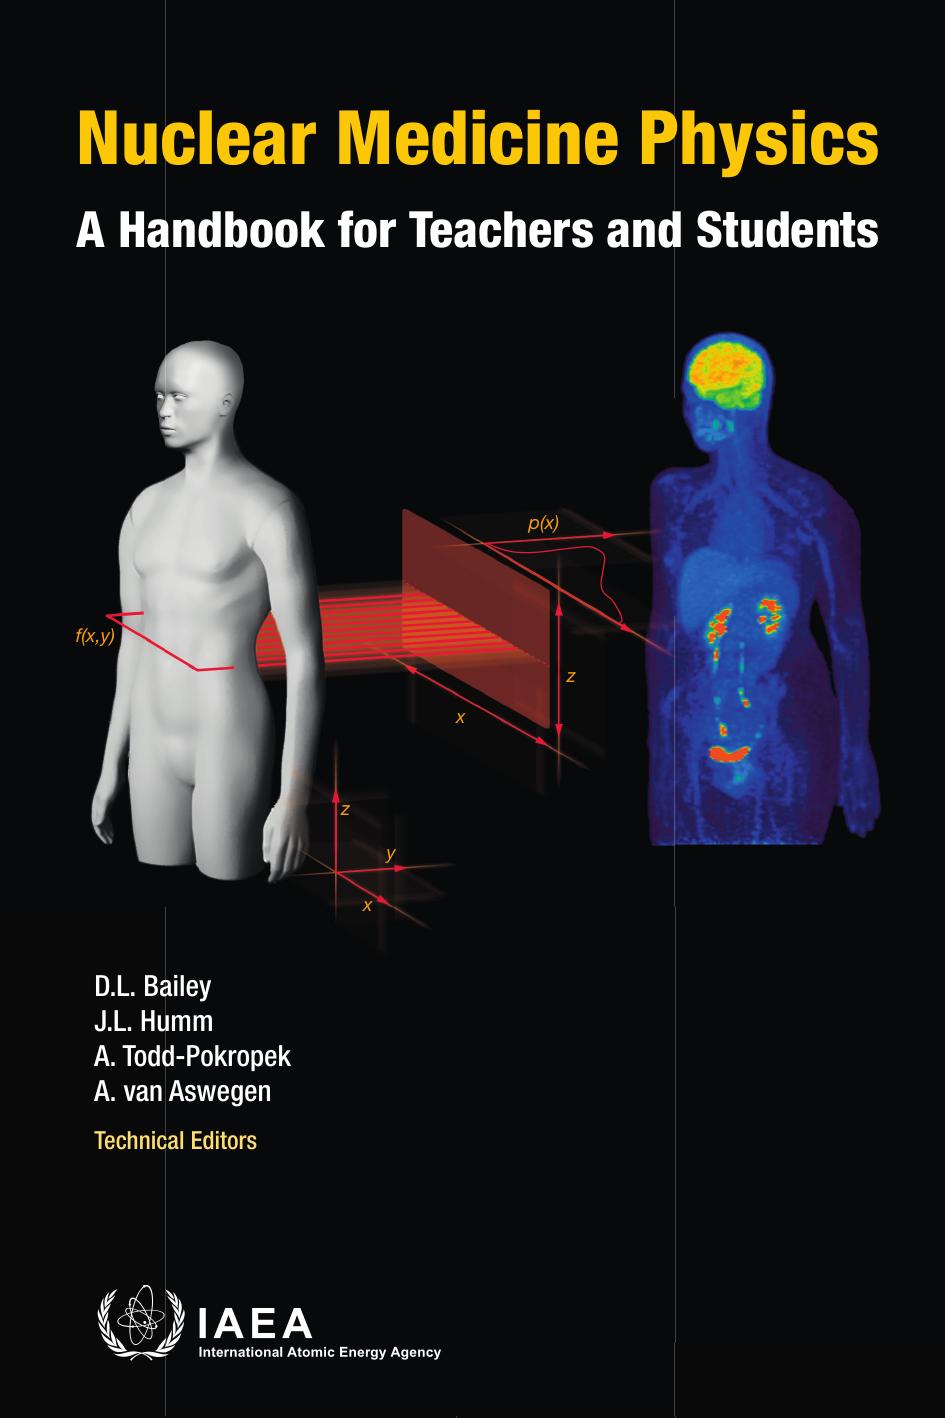 Nuclear medicine physics : a handbook for students and teachers